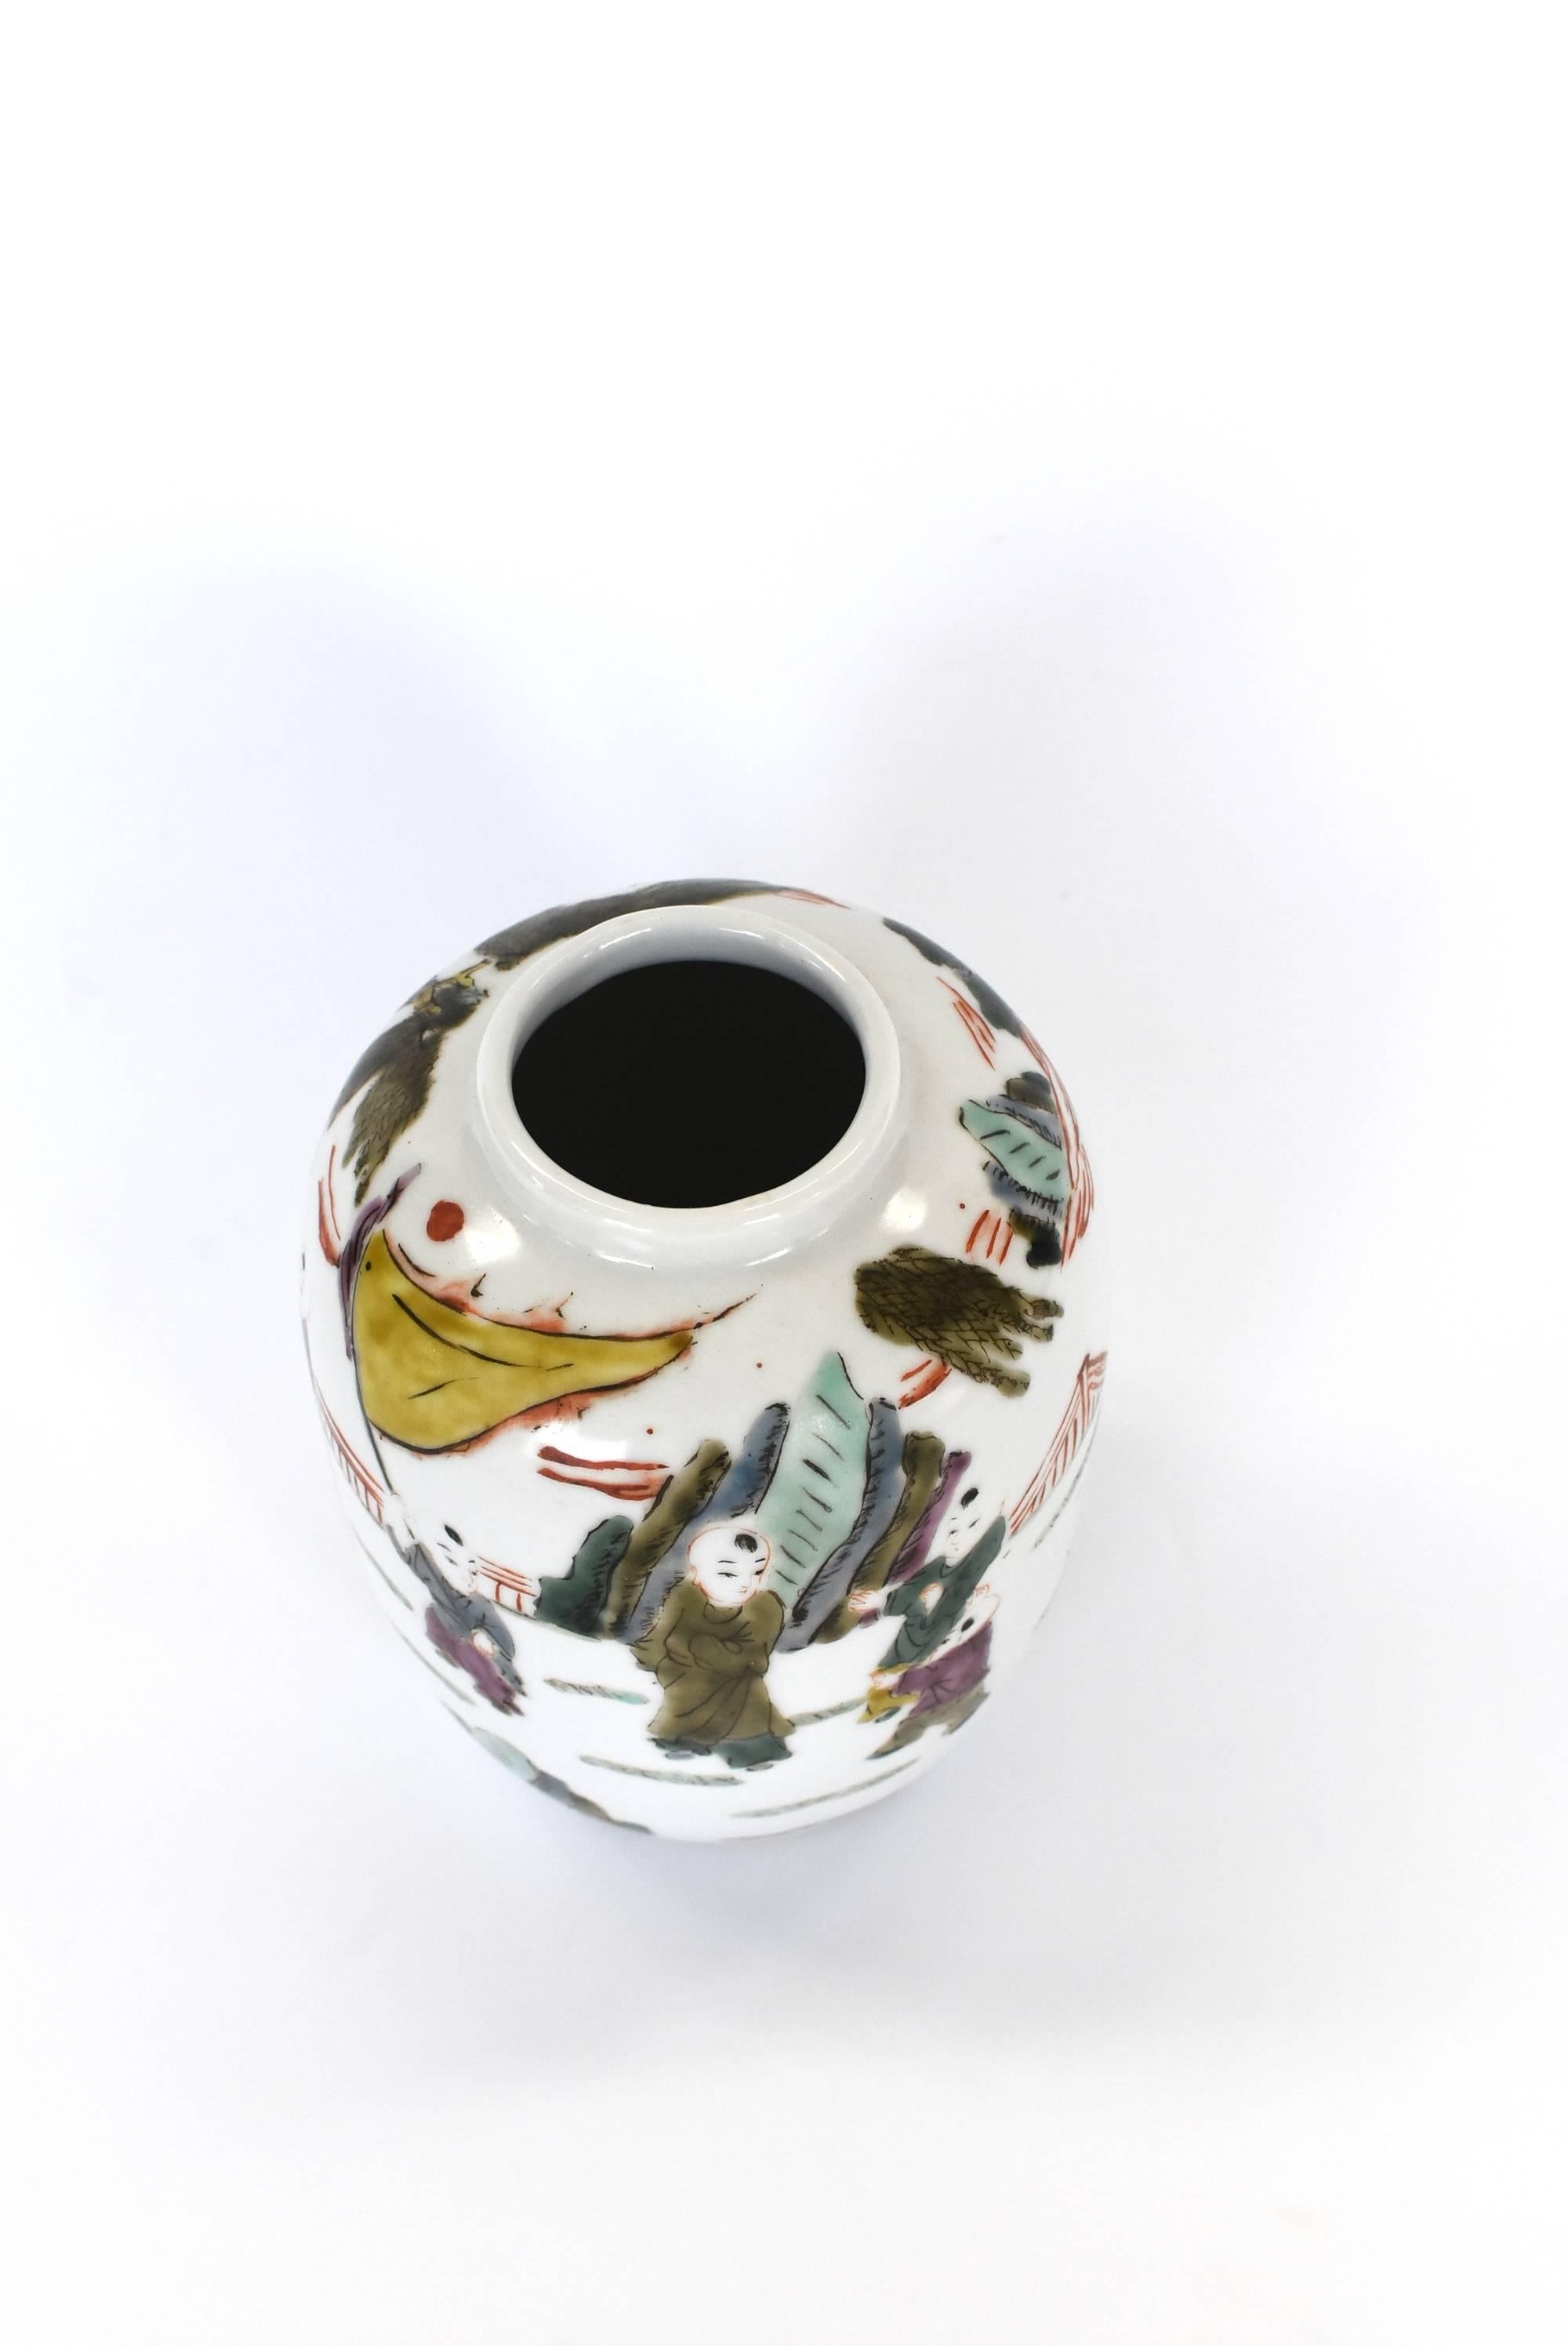 20th Century Chinese Porcelain Vase, Republic Era, with Maker's Mark